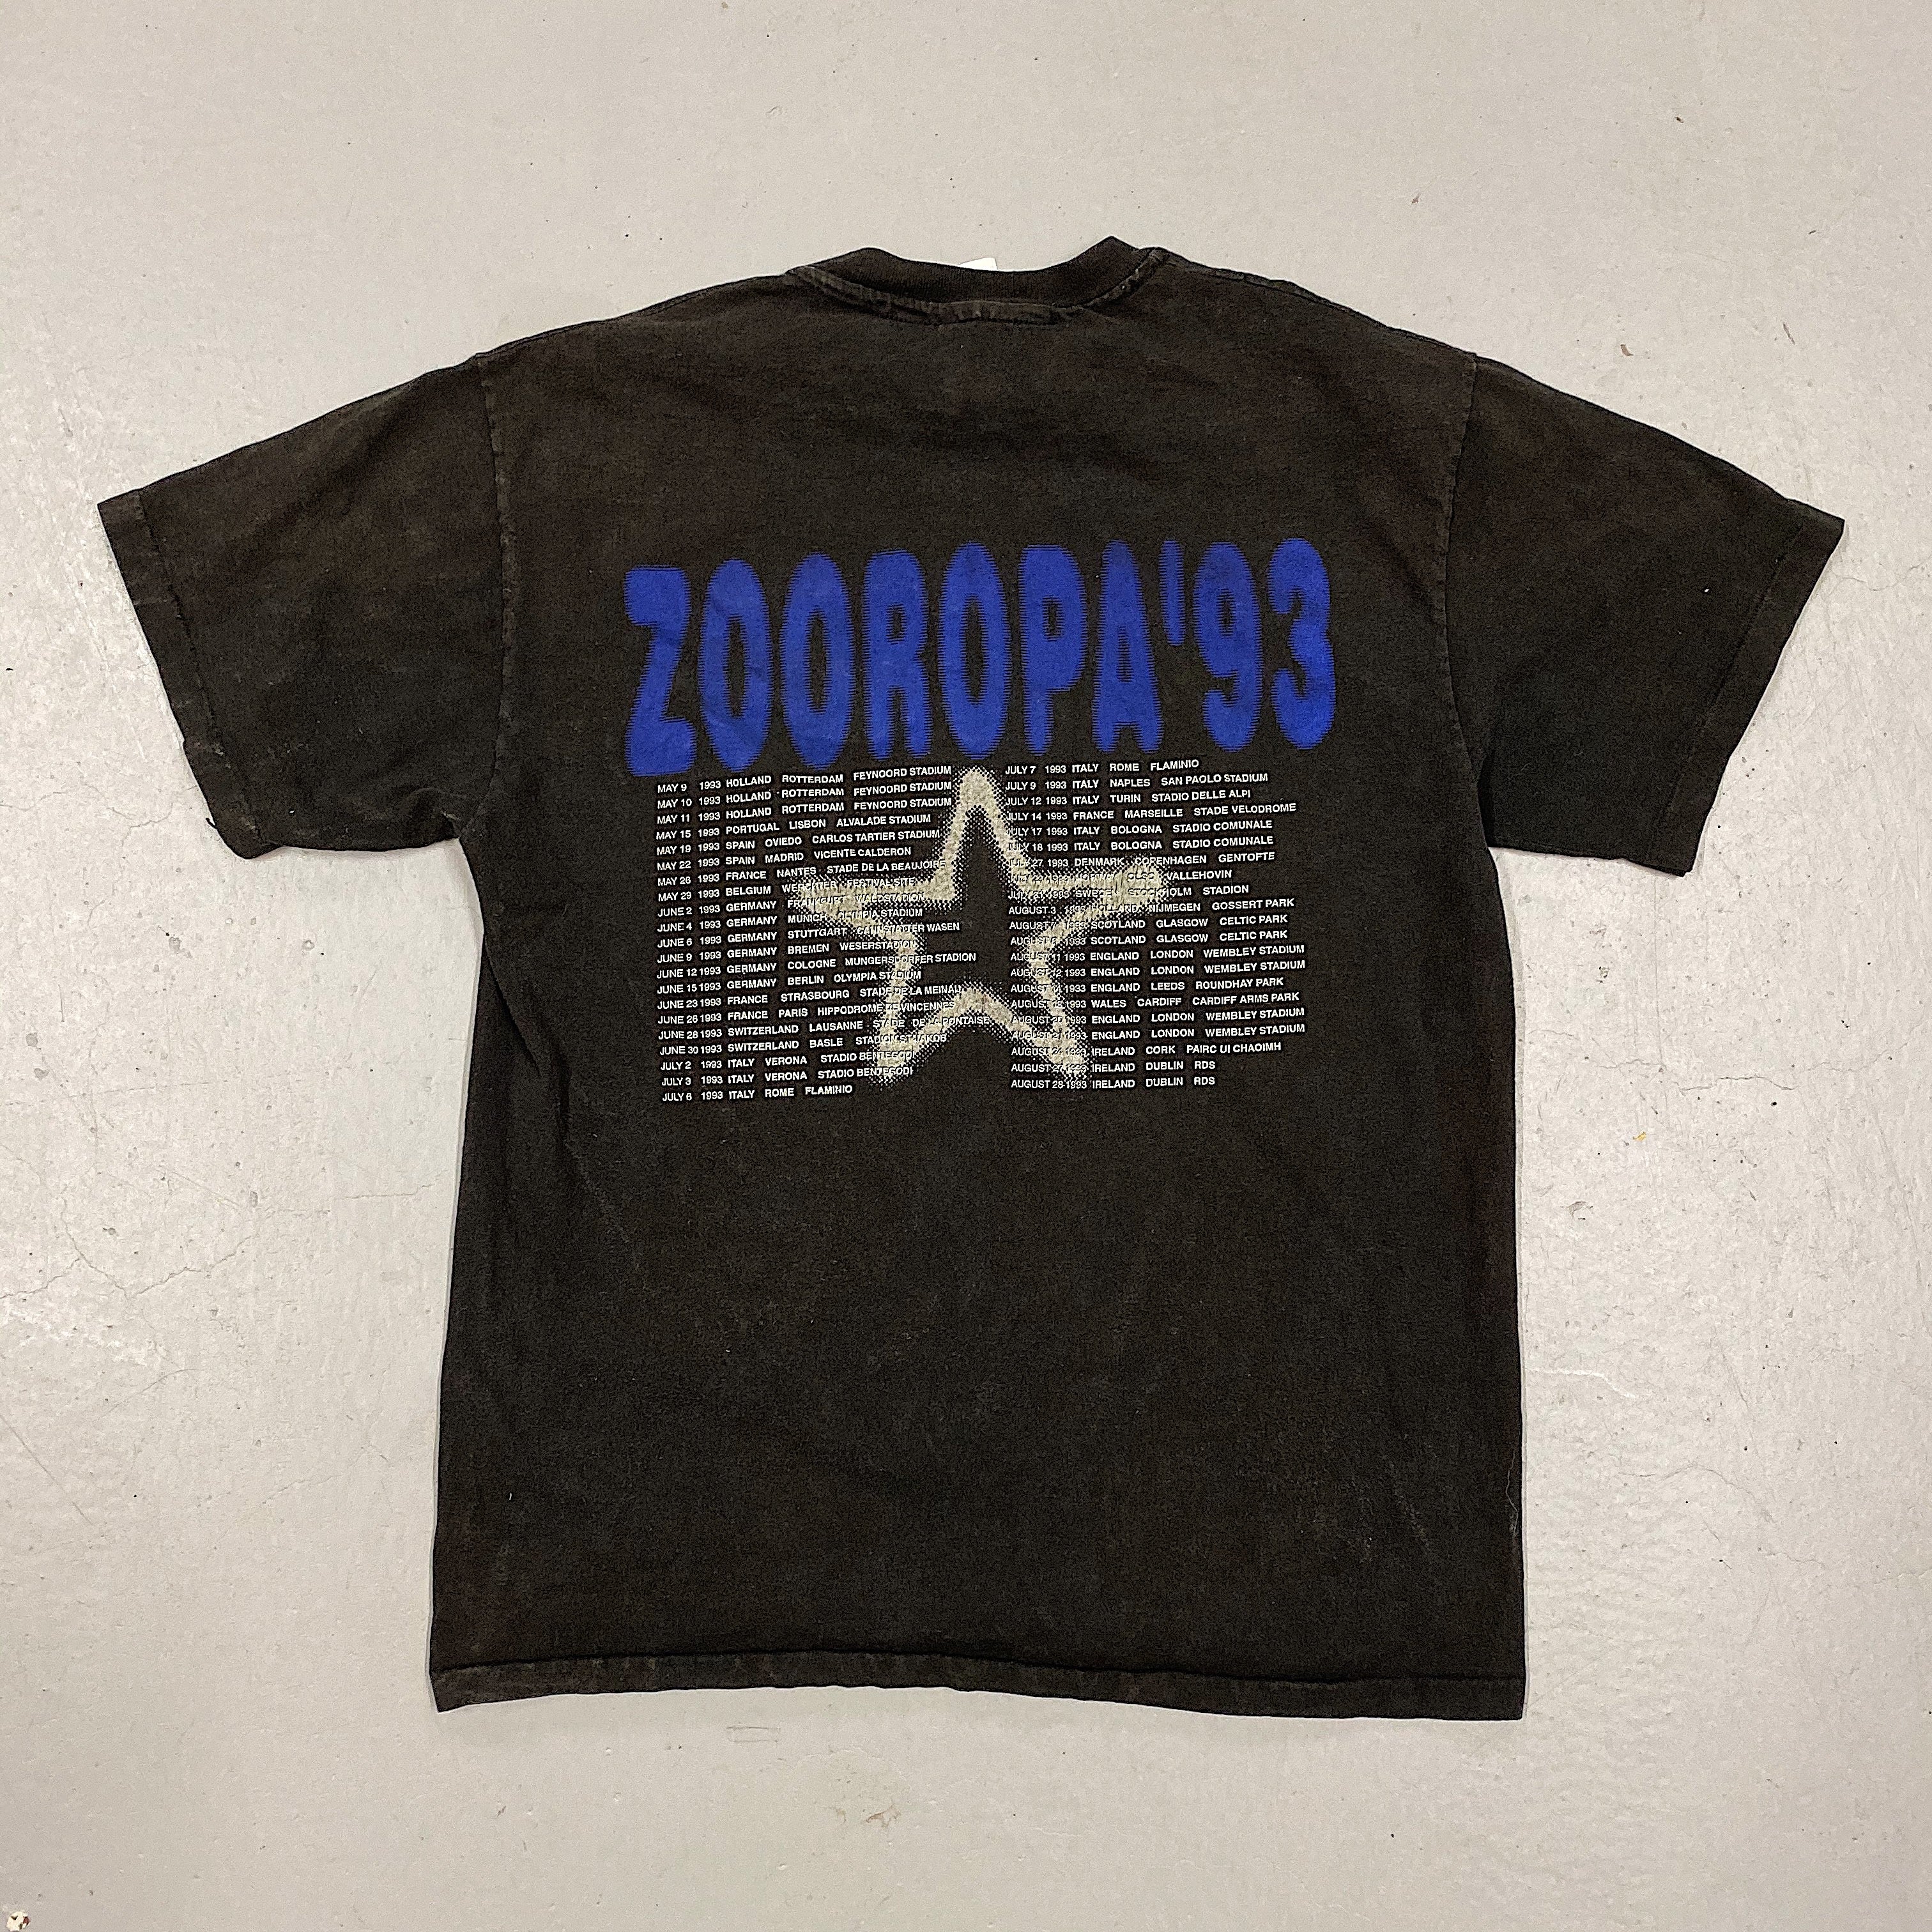 U2 Zooropa Concert T-Shirt - 1993 Zoo TV European Tour - Large Size - Hanes Tag - Rare Vintage Rock Shirts - 1990s 